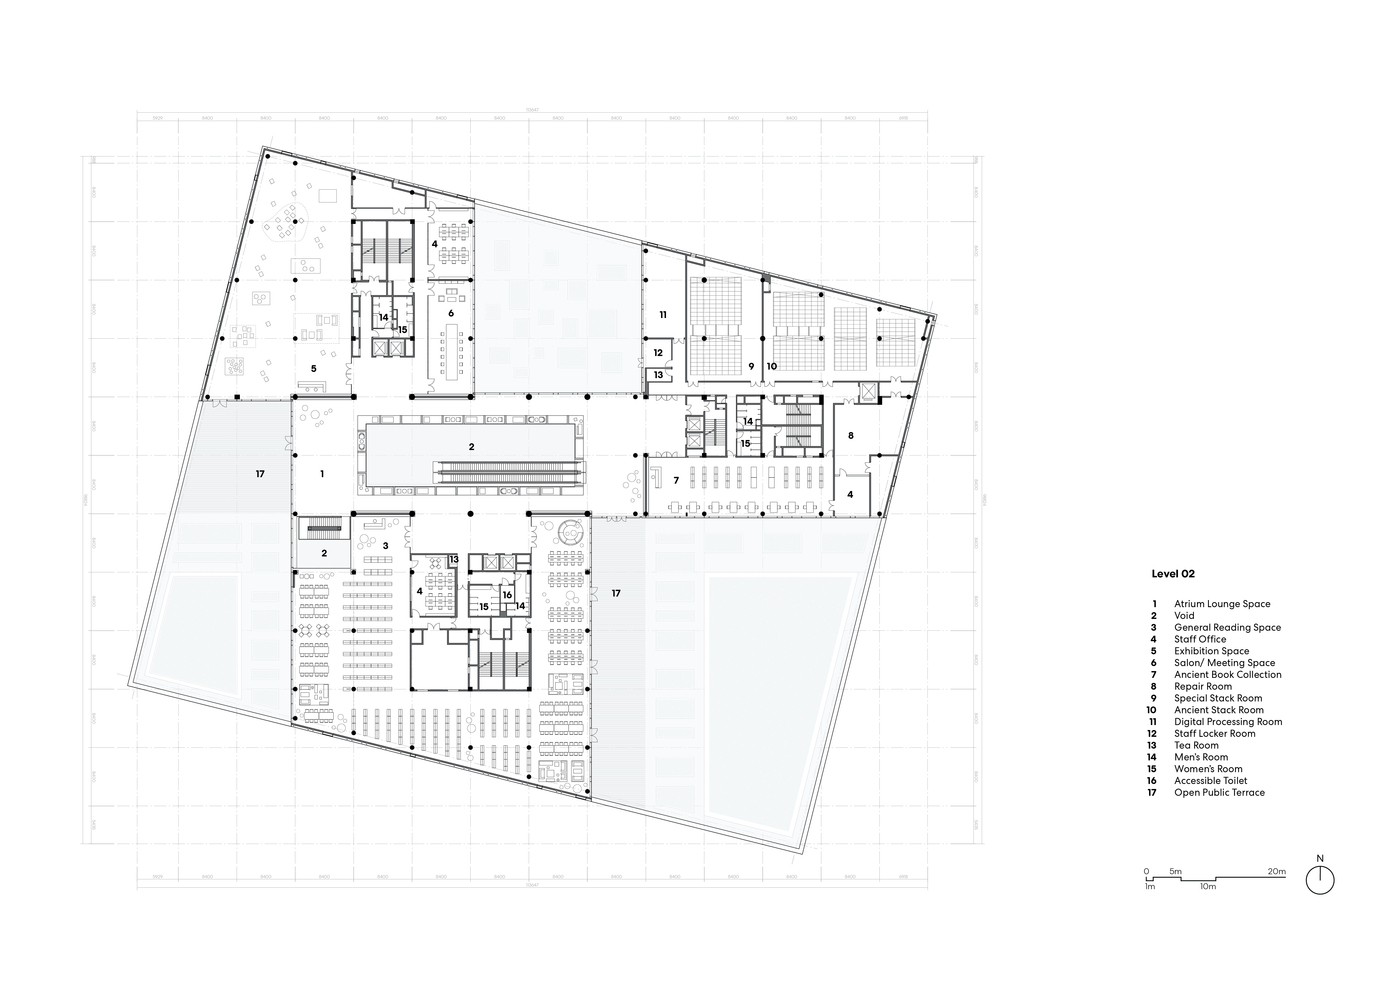 Schmidt_Hammer_Lassen_Architects_Ningbo_New_Library_Plans-02.jpg